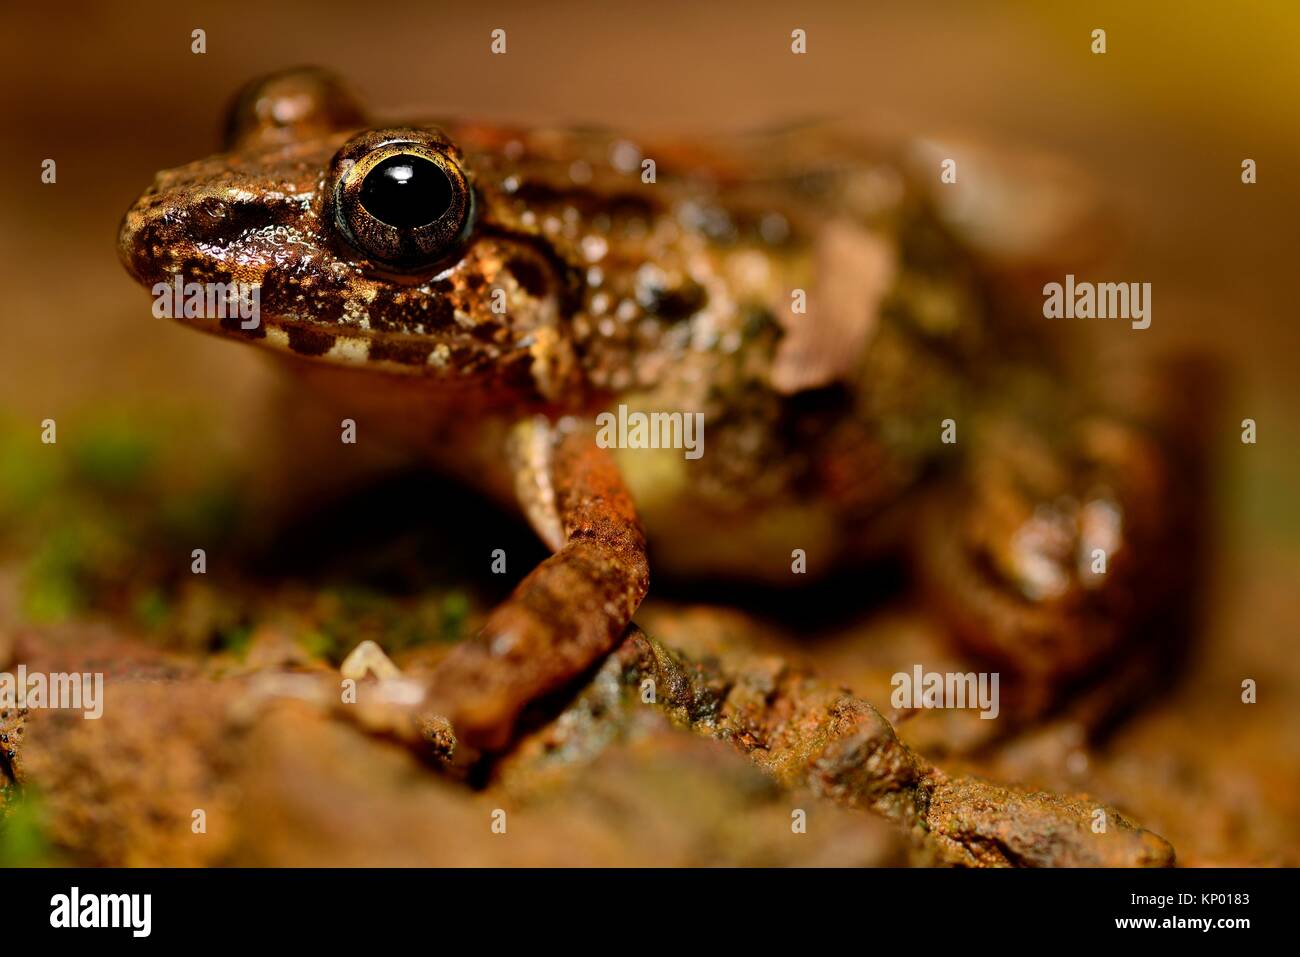 Common frog (Fejervarya keralensis) in Cotigao, Goa, India. Stock Photo